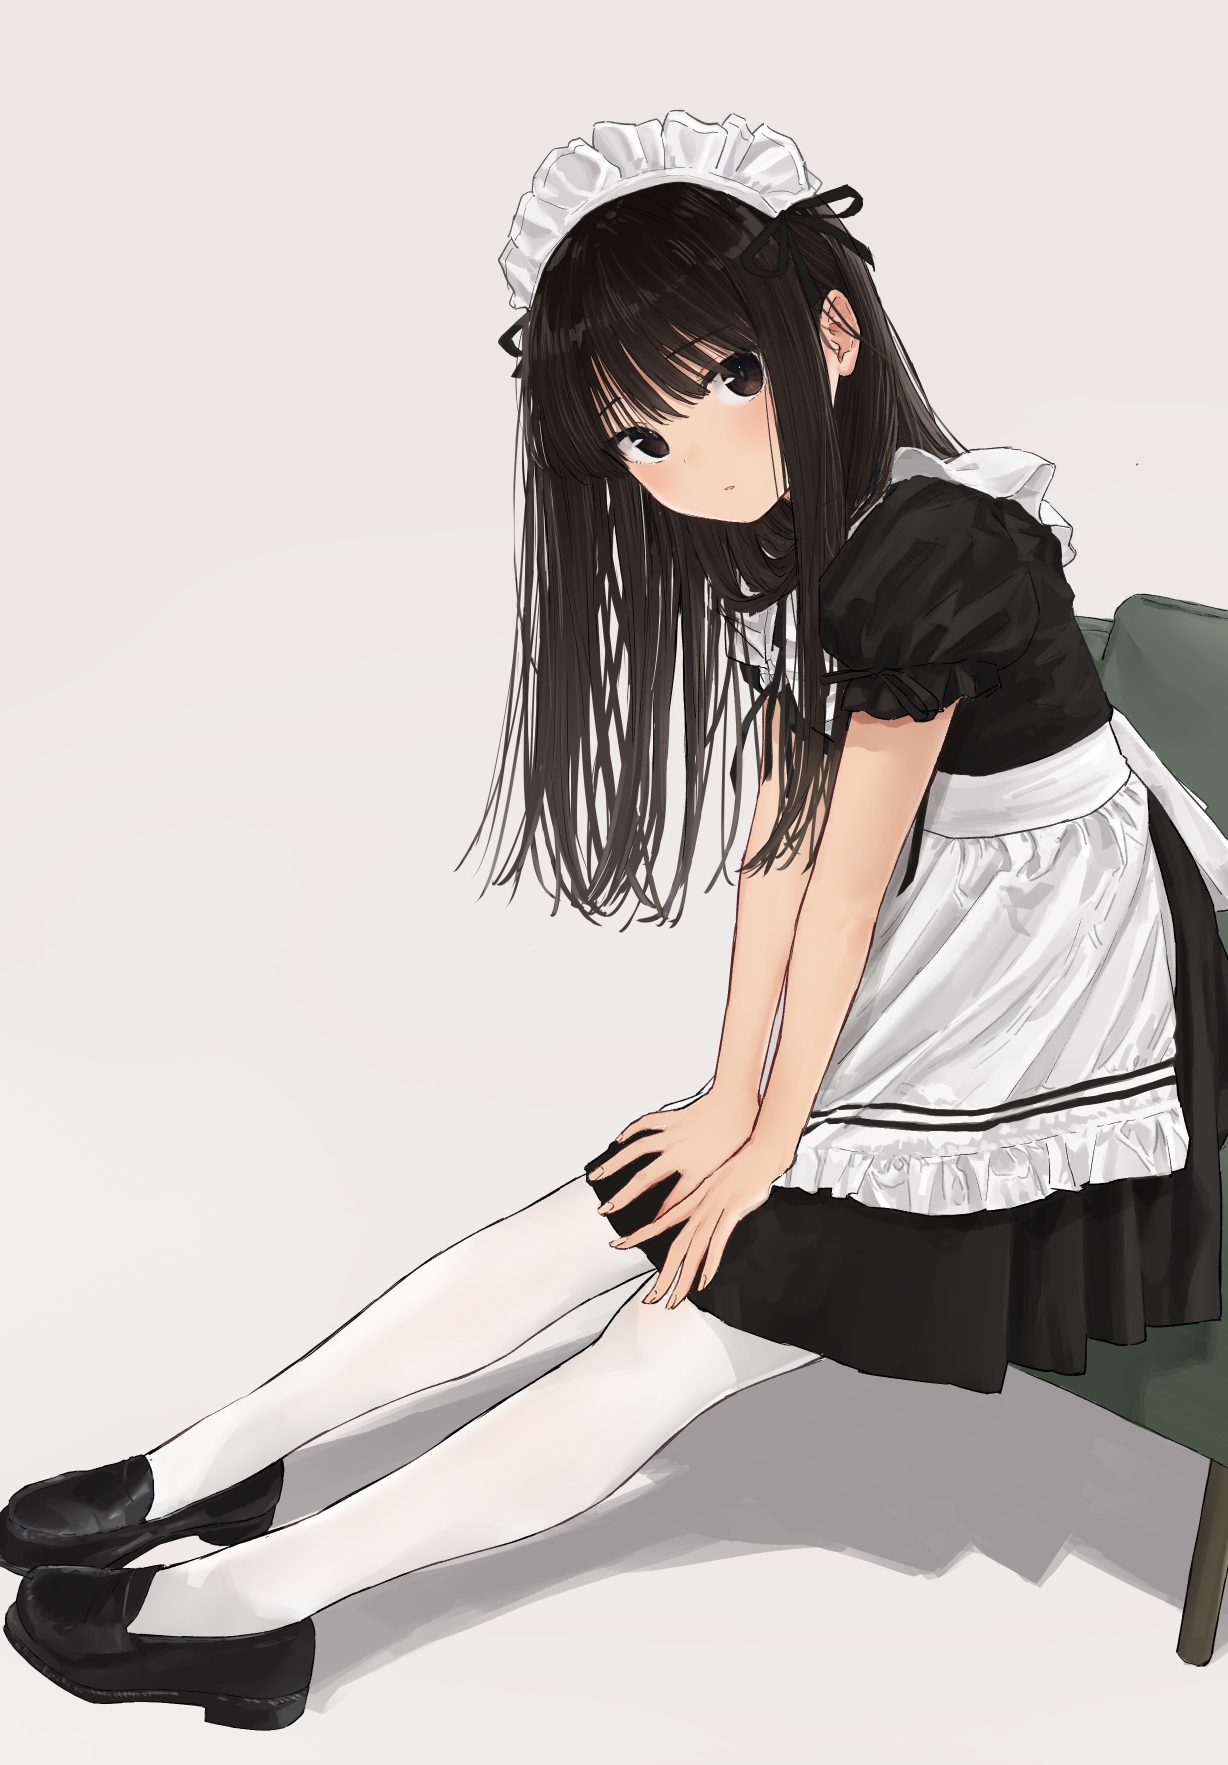 Anime 1228x1765 anime anime girls original characters maid maid outfit artwork digital art fan art